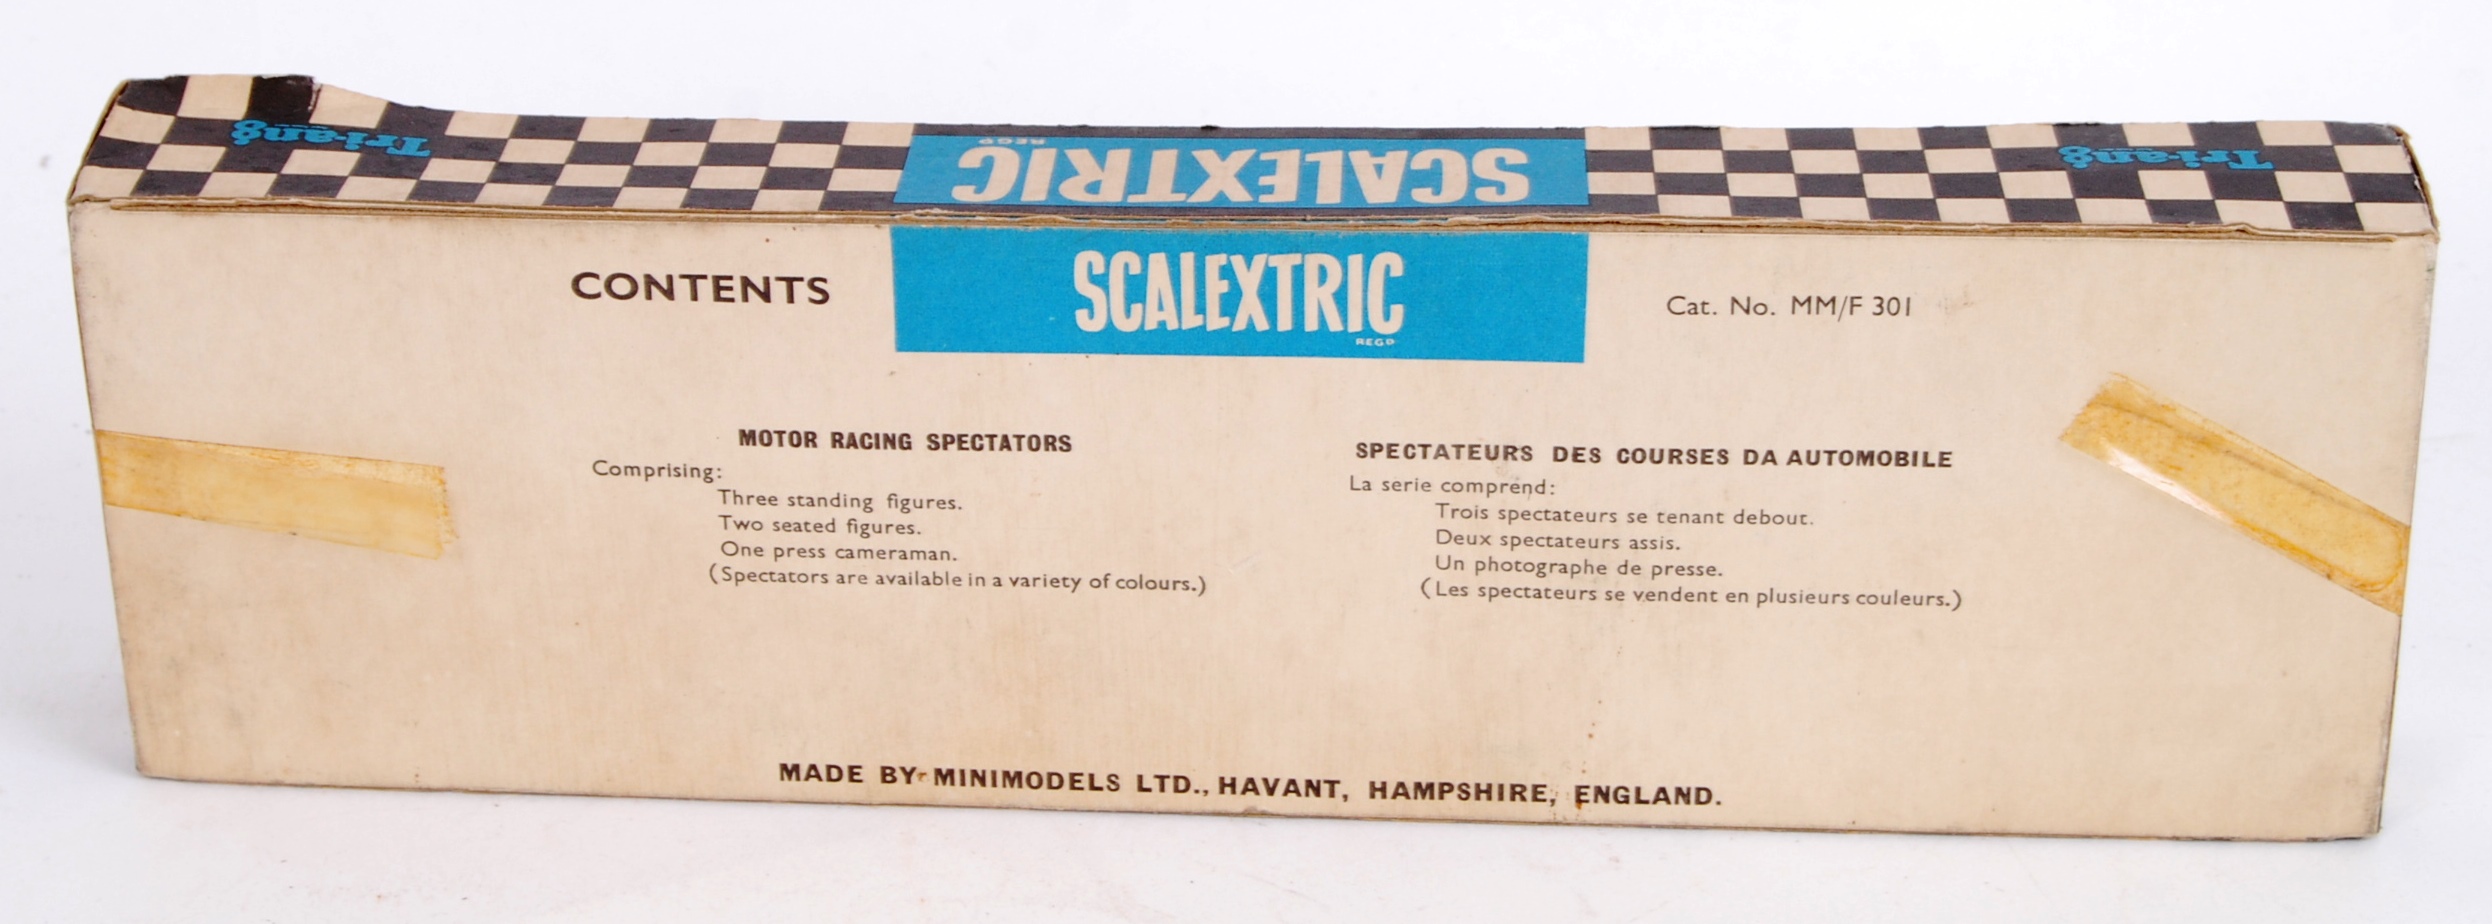 SCALEXTRIC: An original vintage Scalextric trackside Model Motor Racing Spectators set of figures, - Image 2 of 3